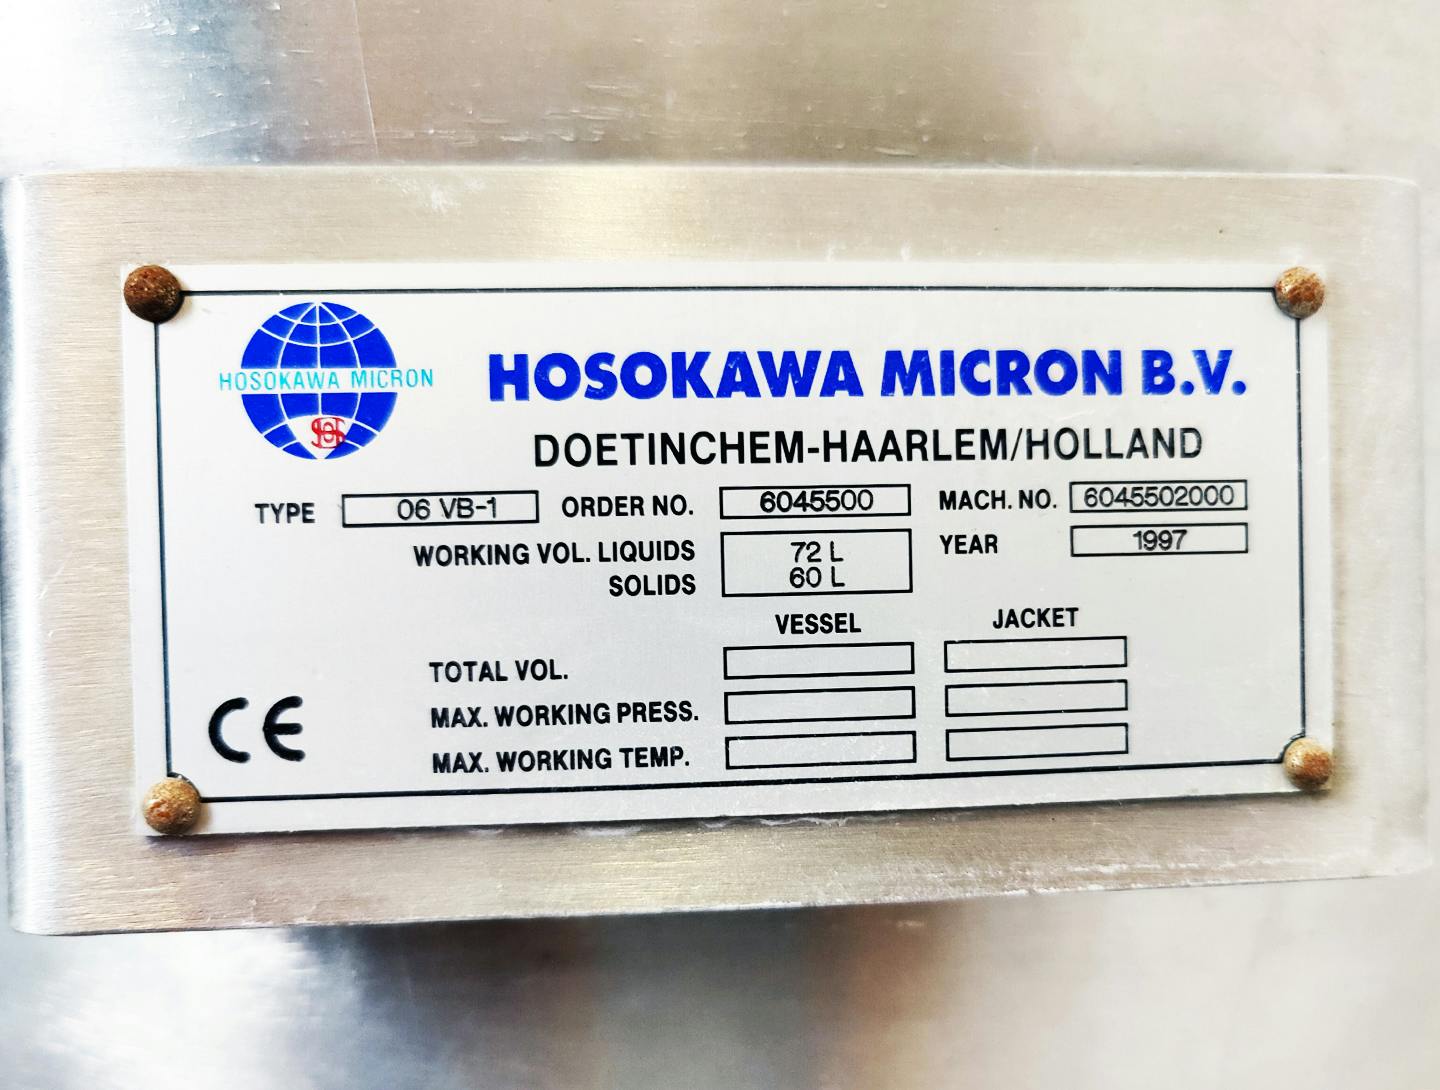 Hosokawa Micron 06-VB-1 - Conical mixer - image 7